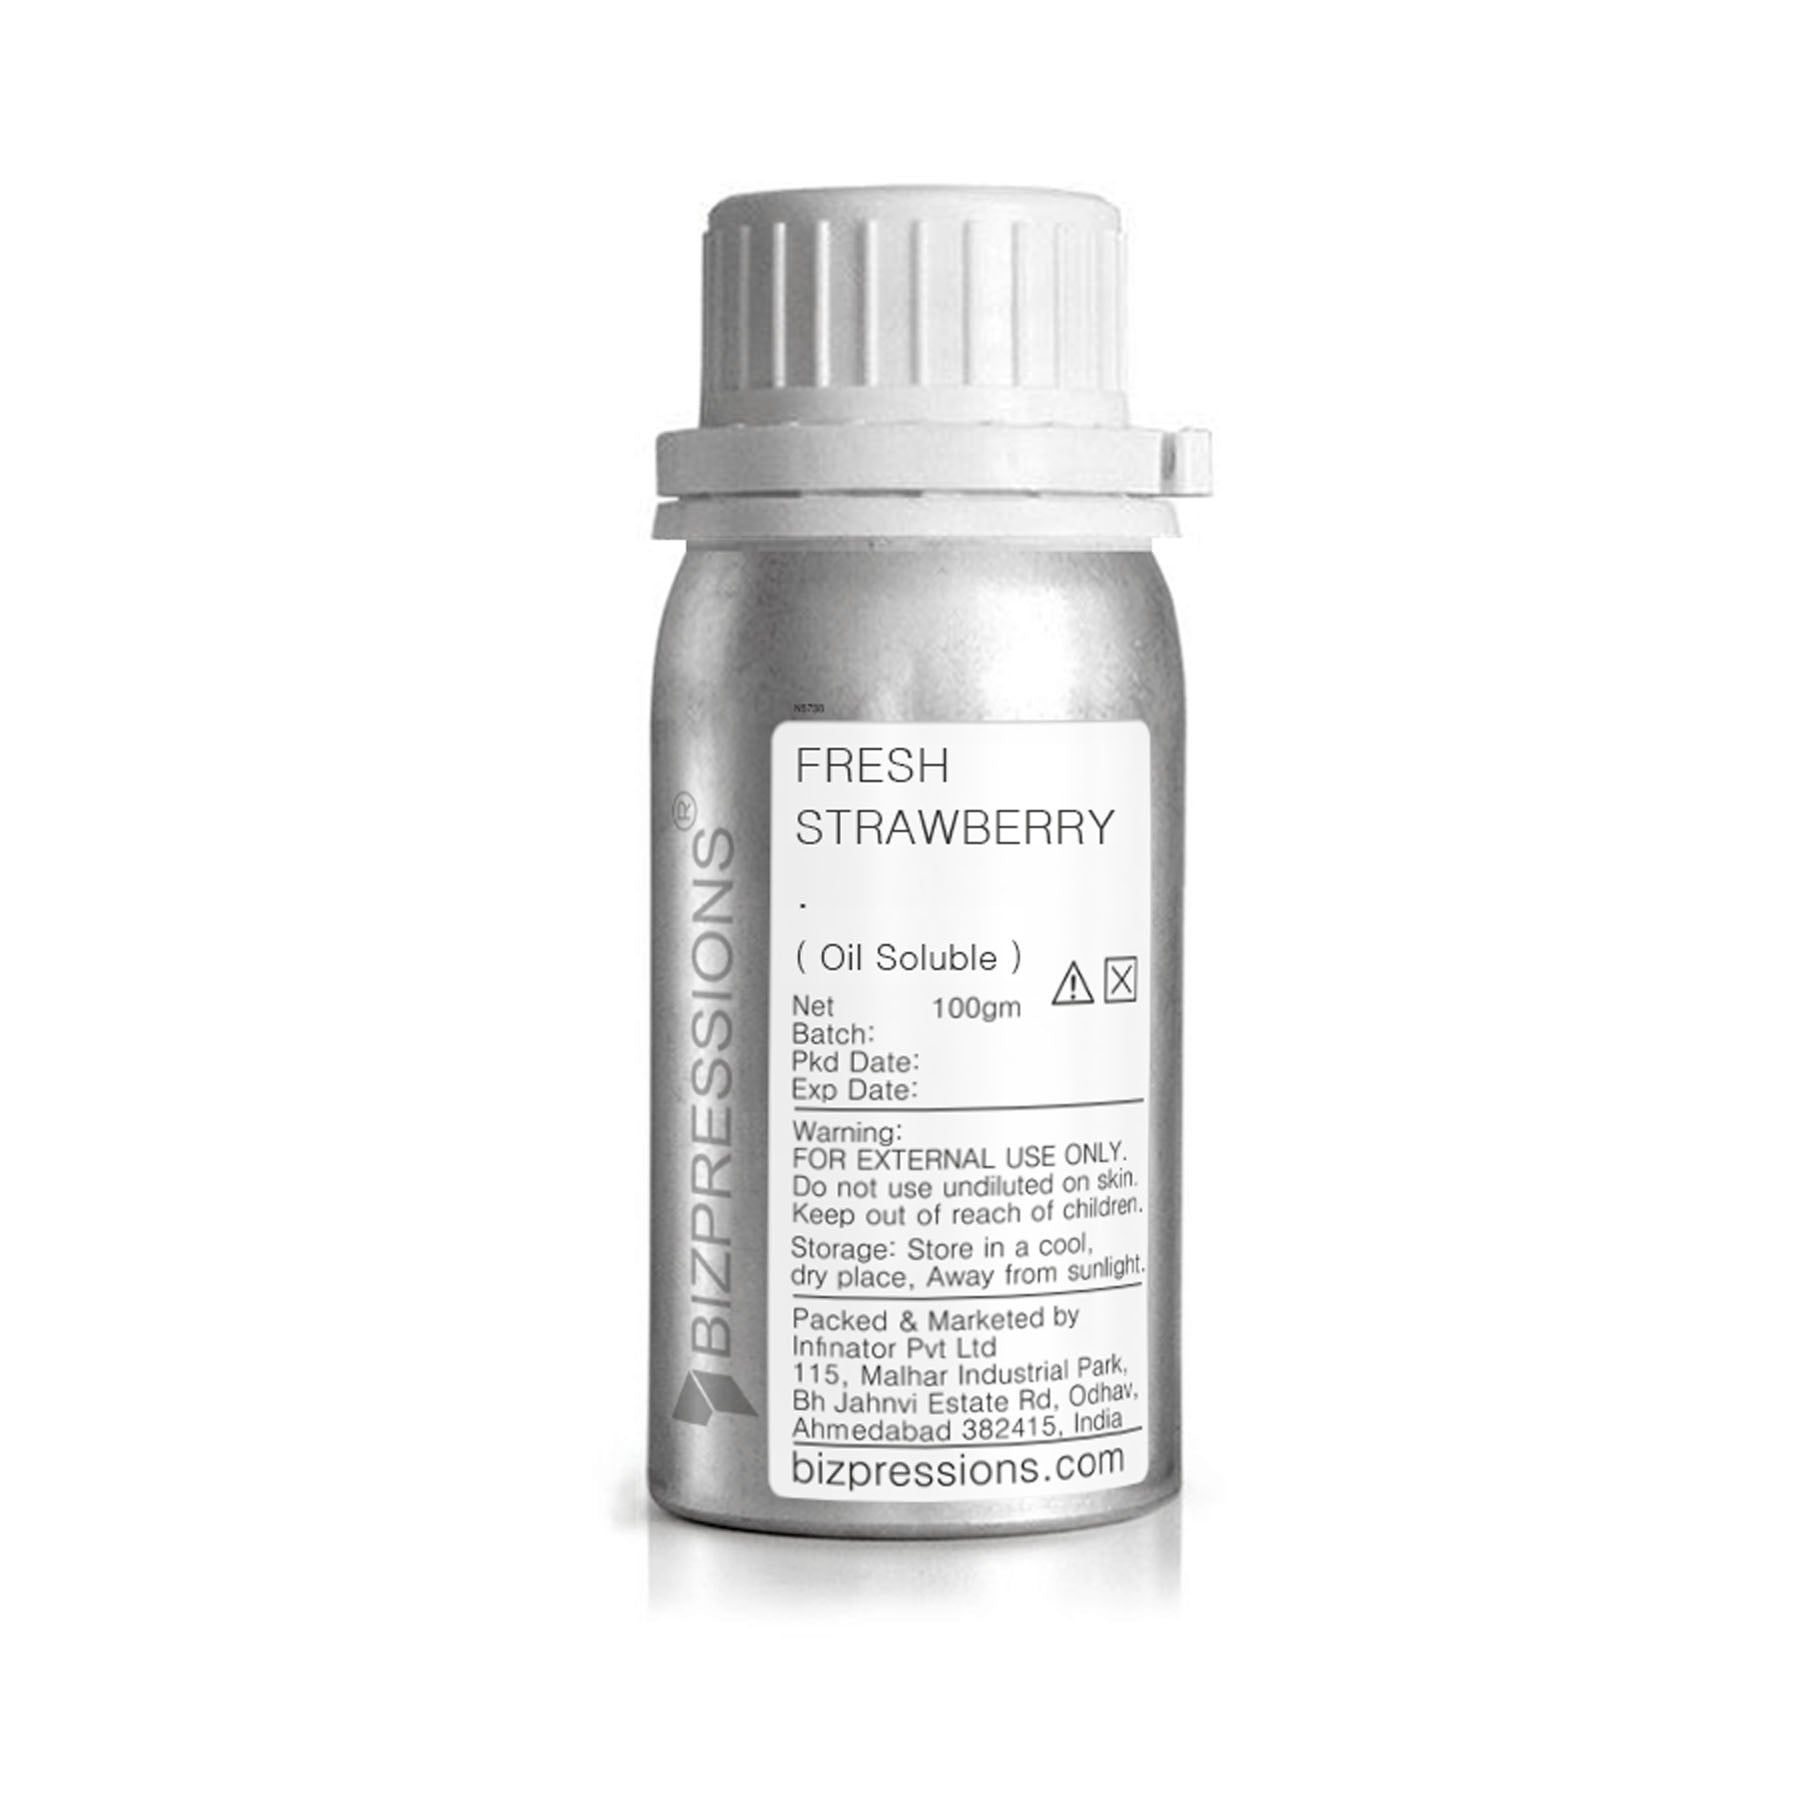 FRESH STRAWBERRY - Fragrance ( Oil Soluble ) - 100 gm